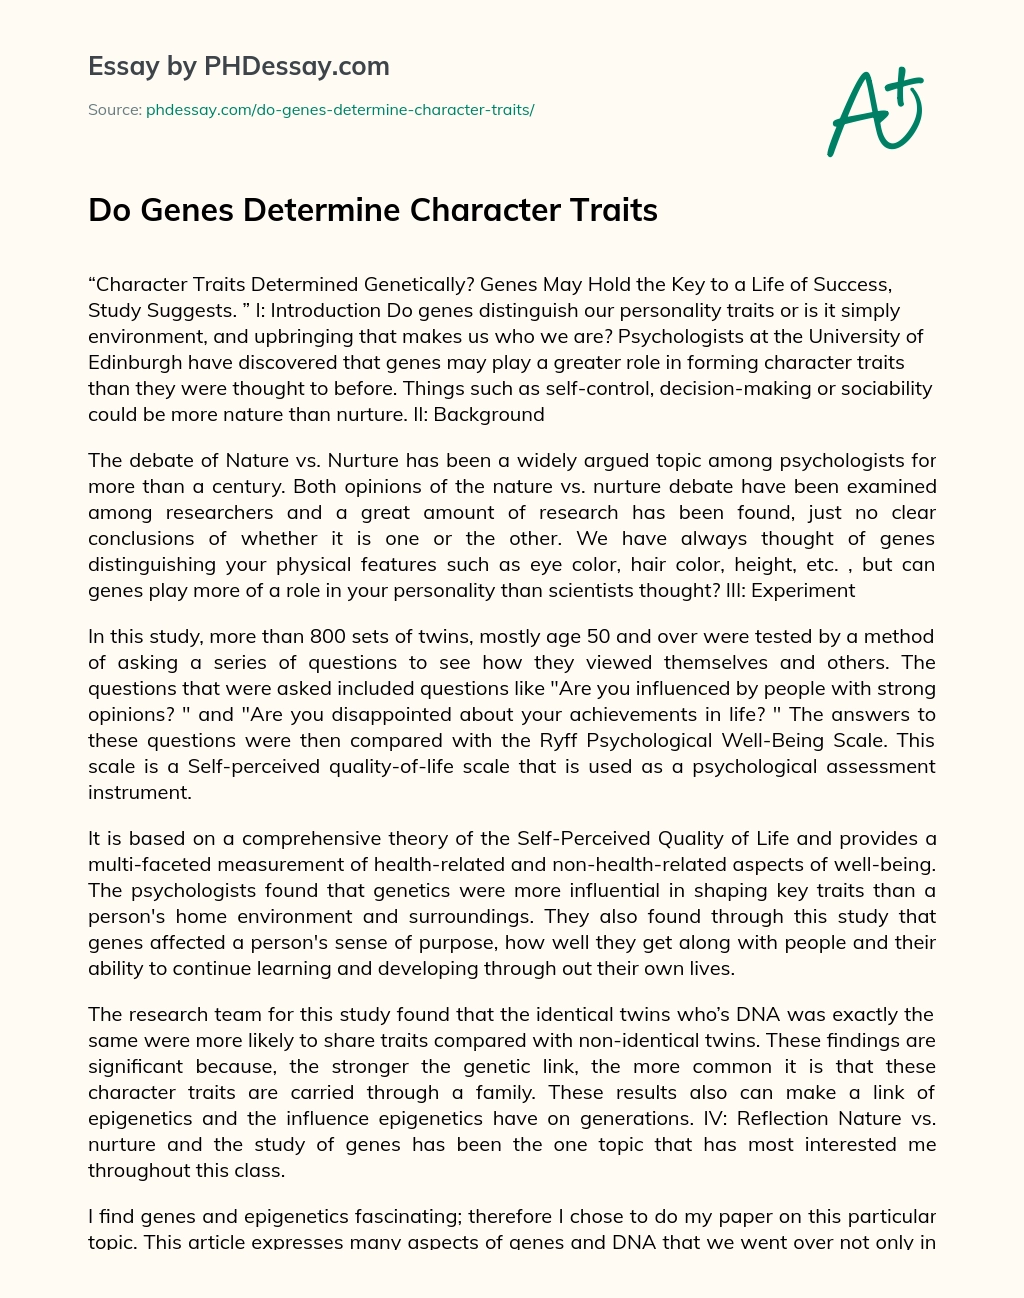 Do Genes Determine Character Traits essay